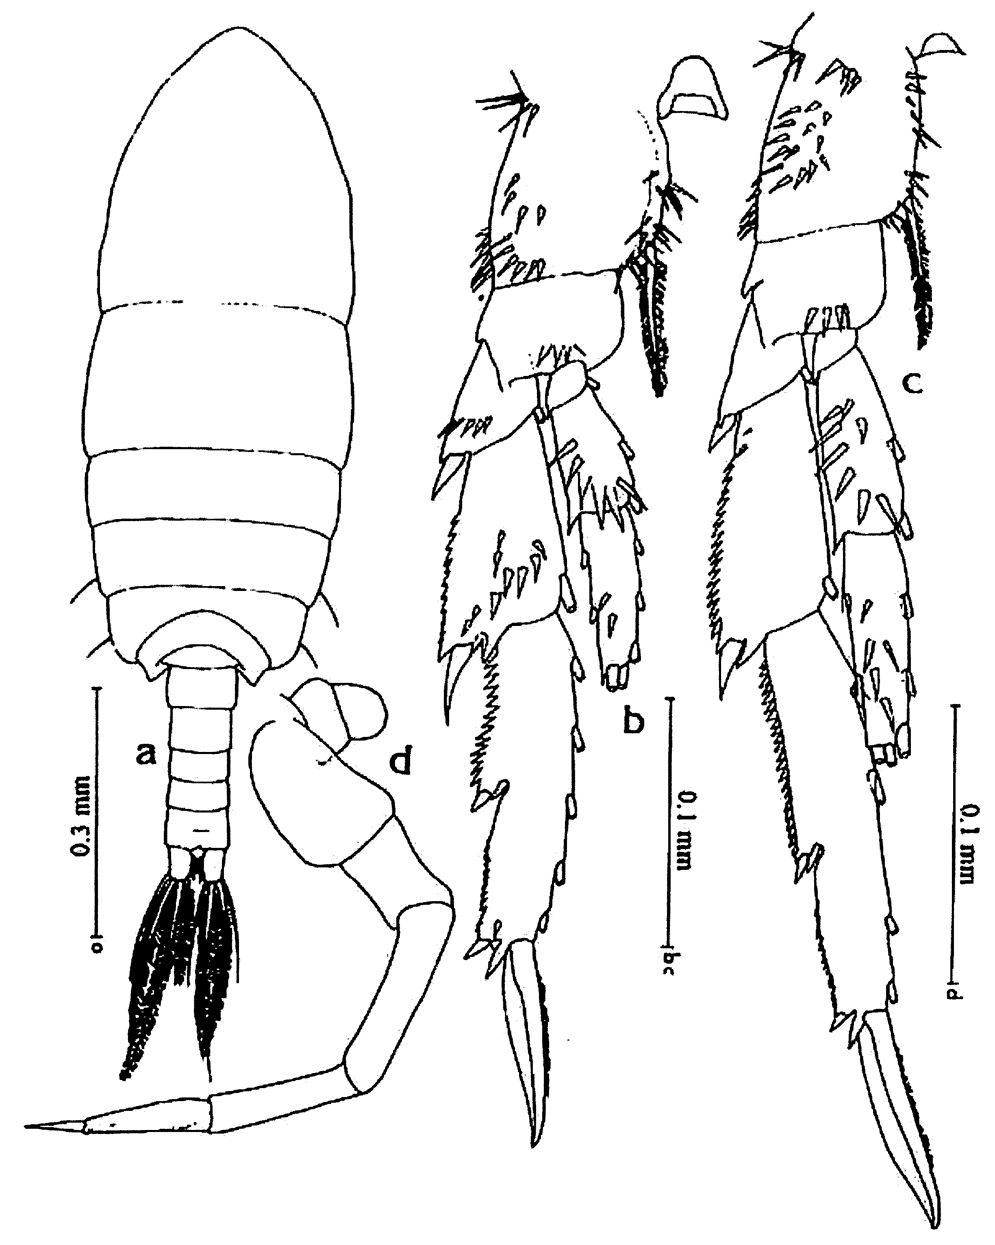 Species Acrocalanus longicornis - Plate 20 of morphological figures